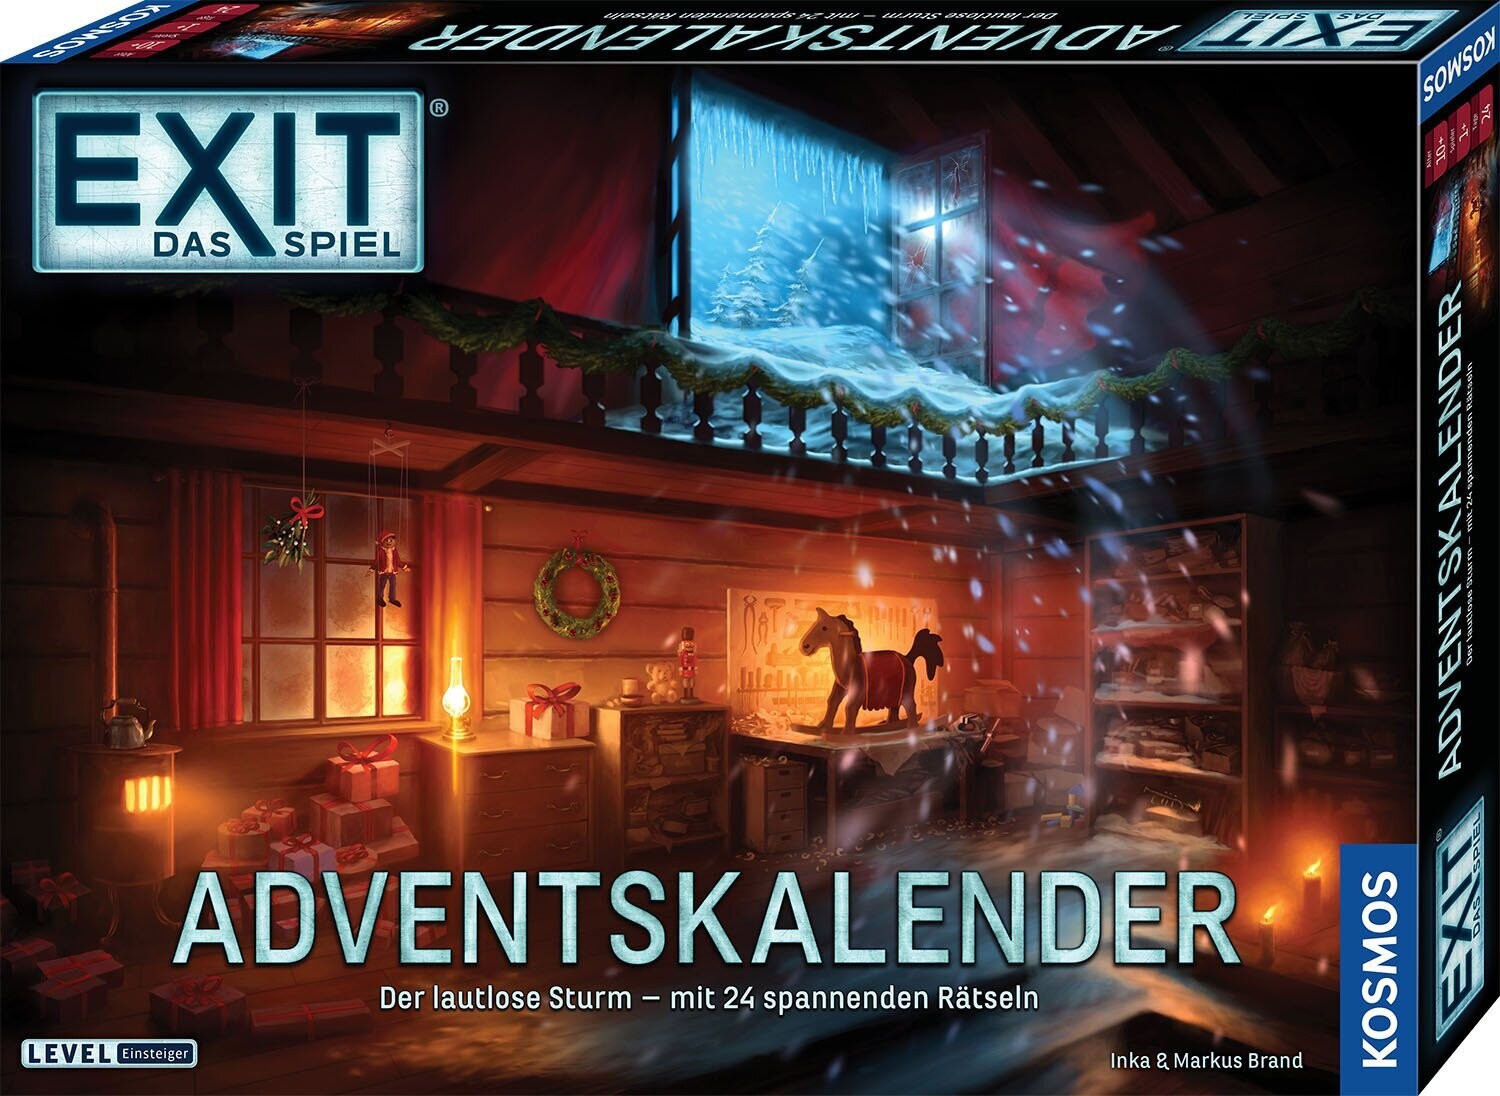 Exit Adventskalender Pro – Der lautlose Sturm